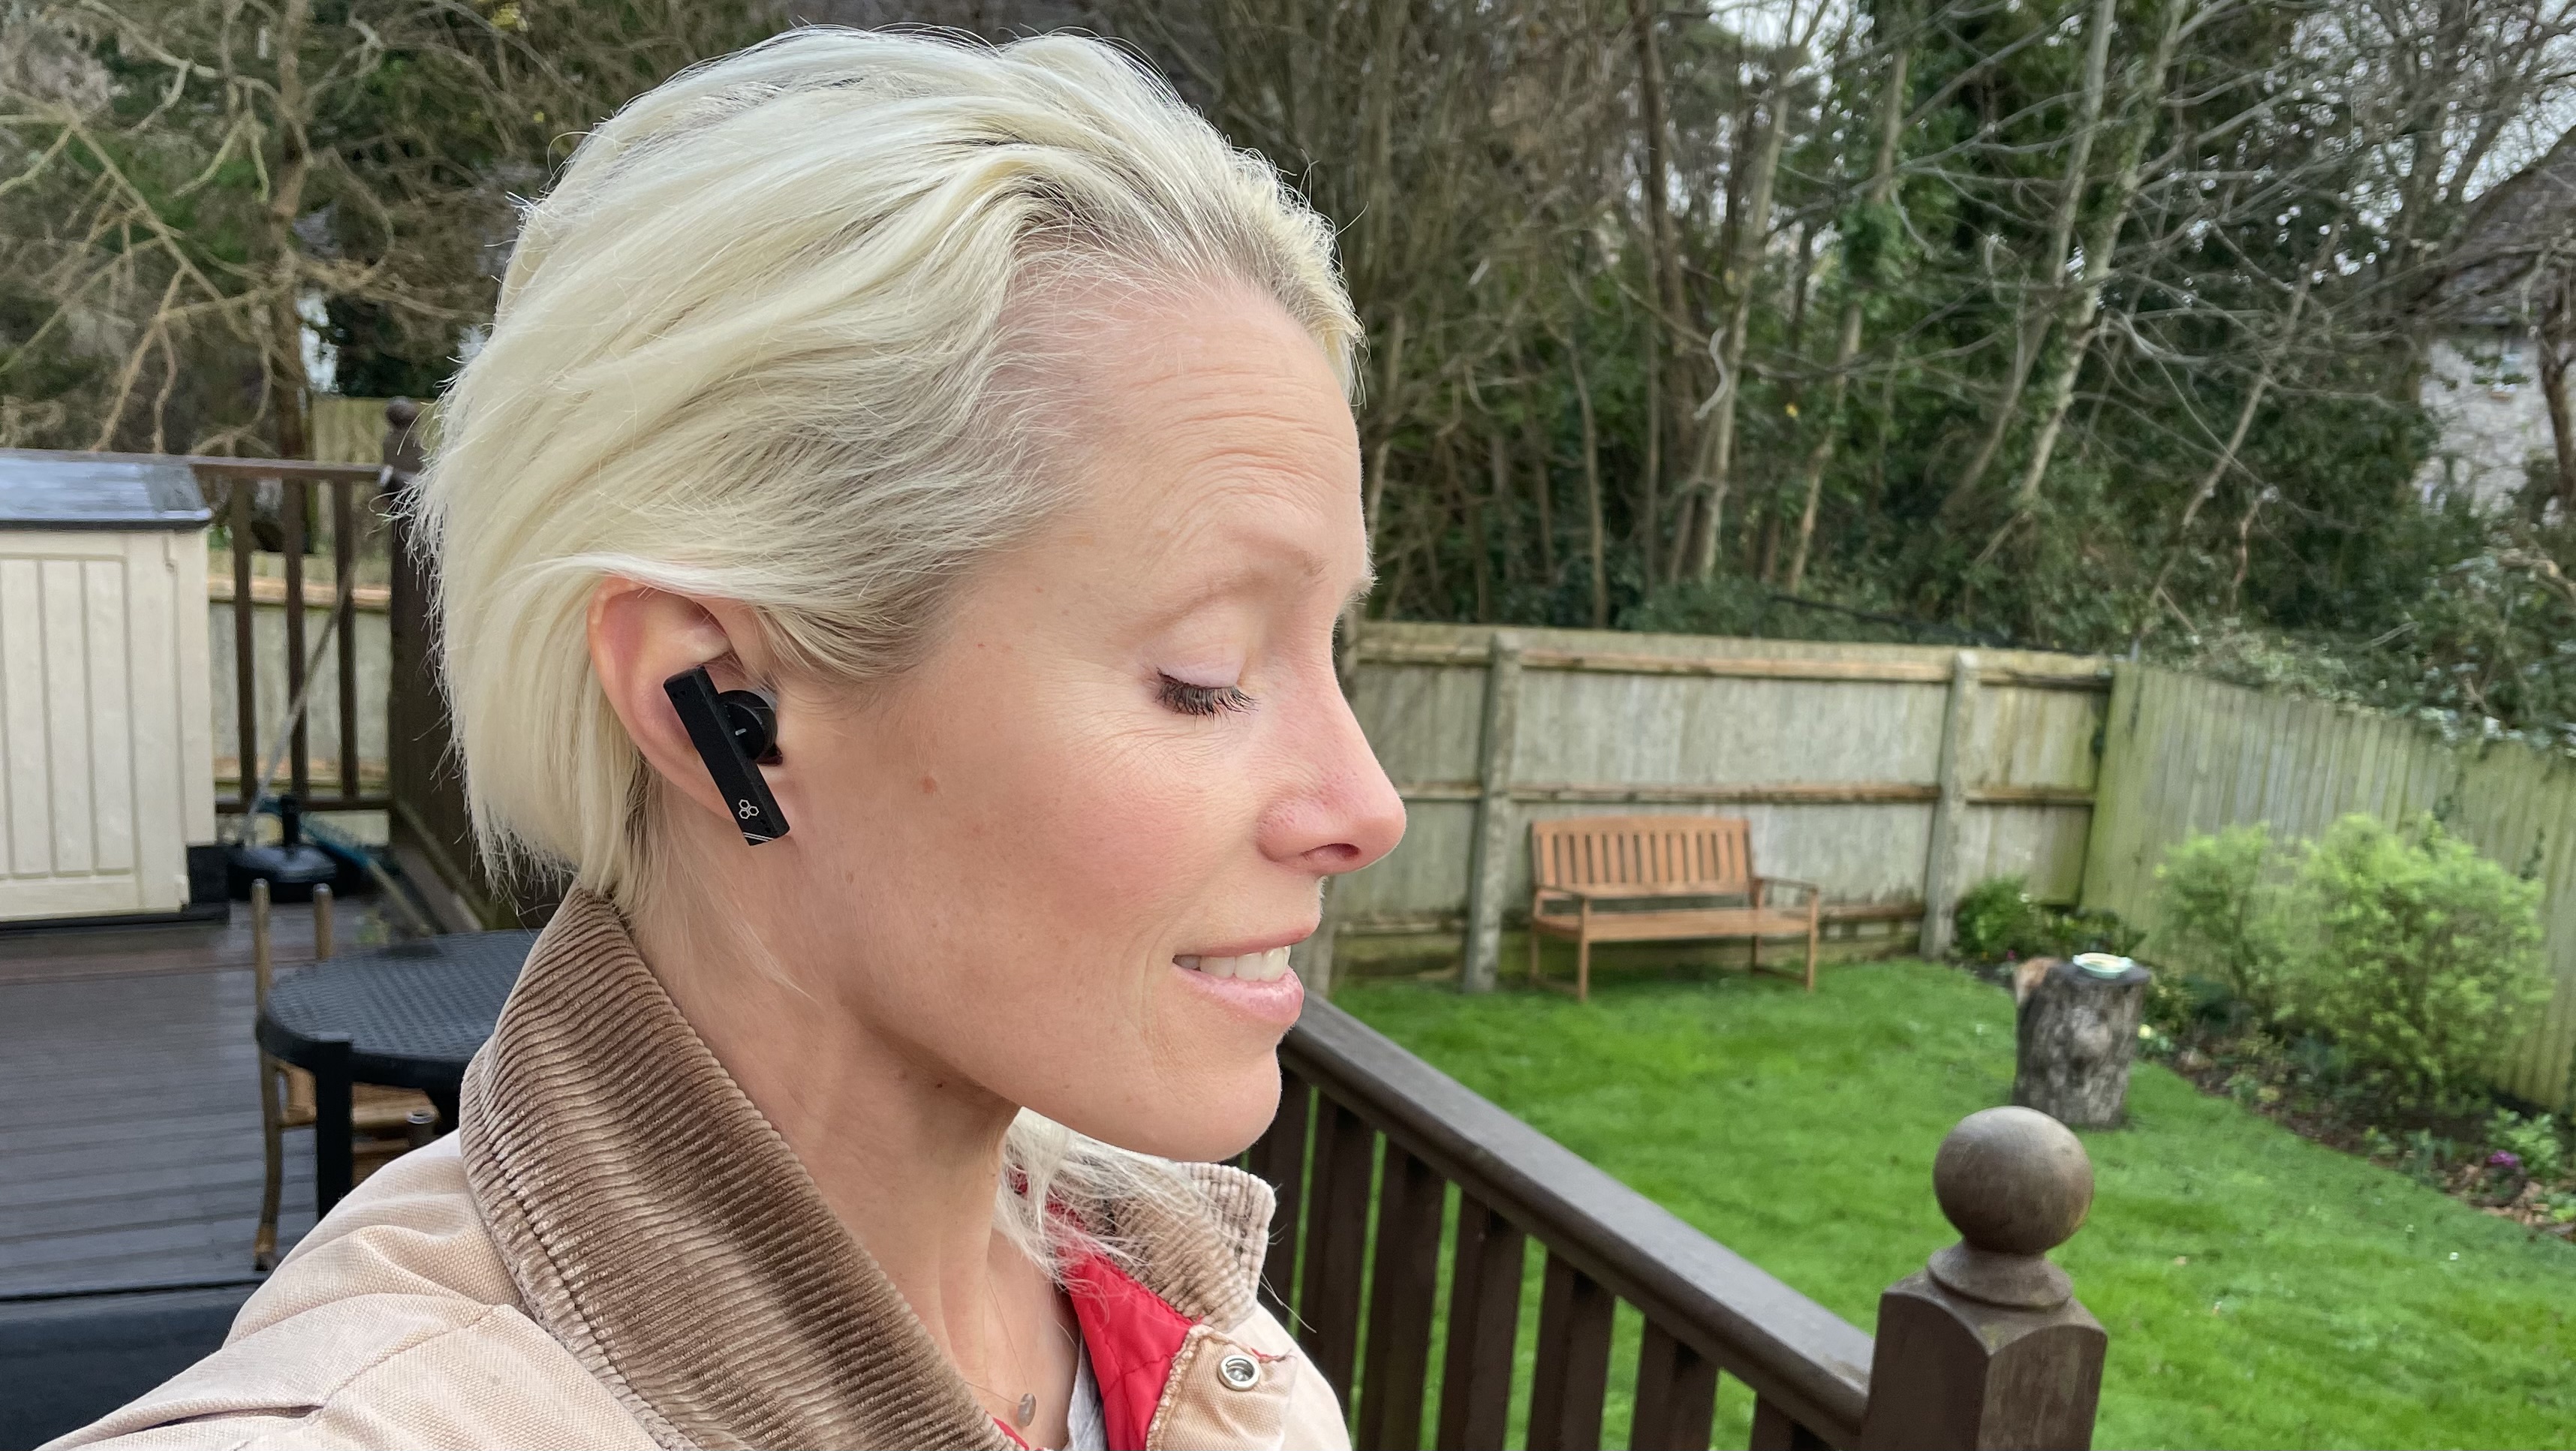 TechRadar's Becky Scarrott wearing the Final ZE8000 MK2 earbuds on a rainy day in the UK